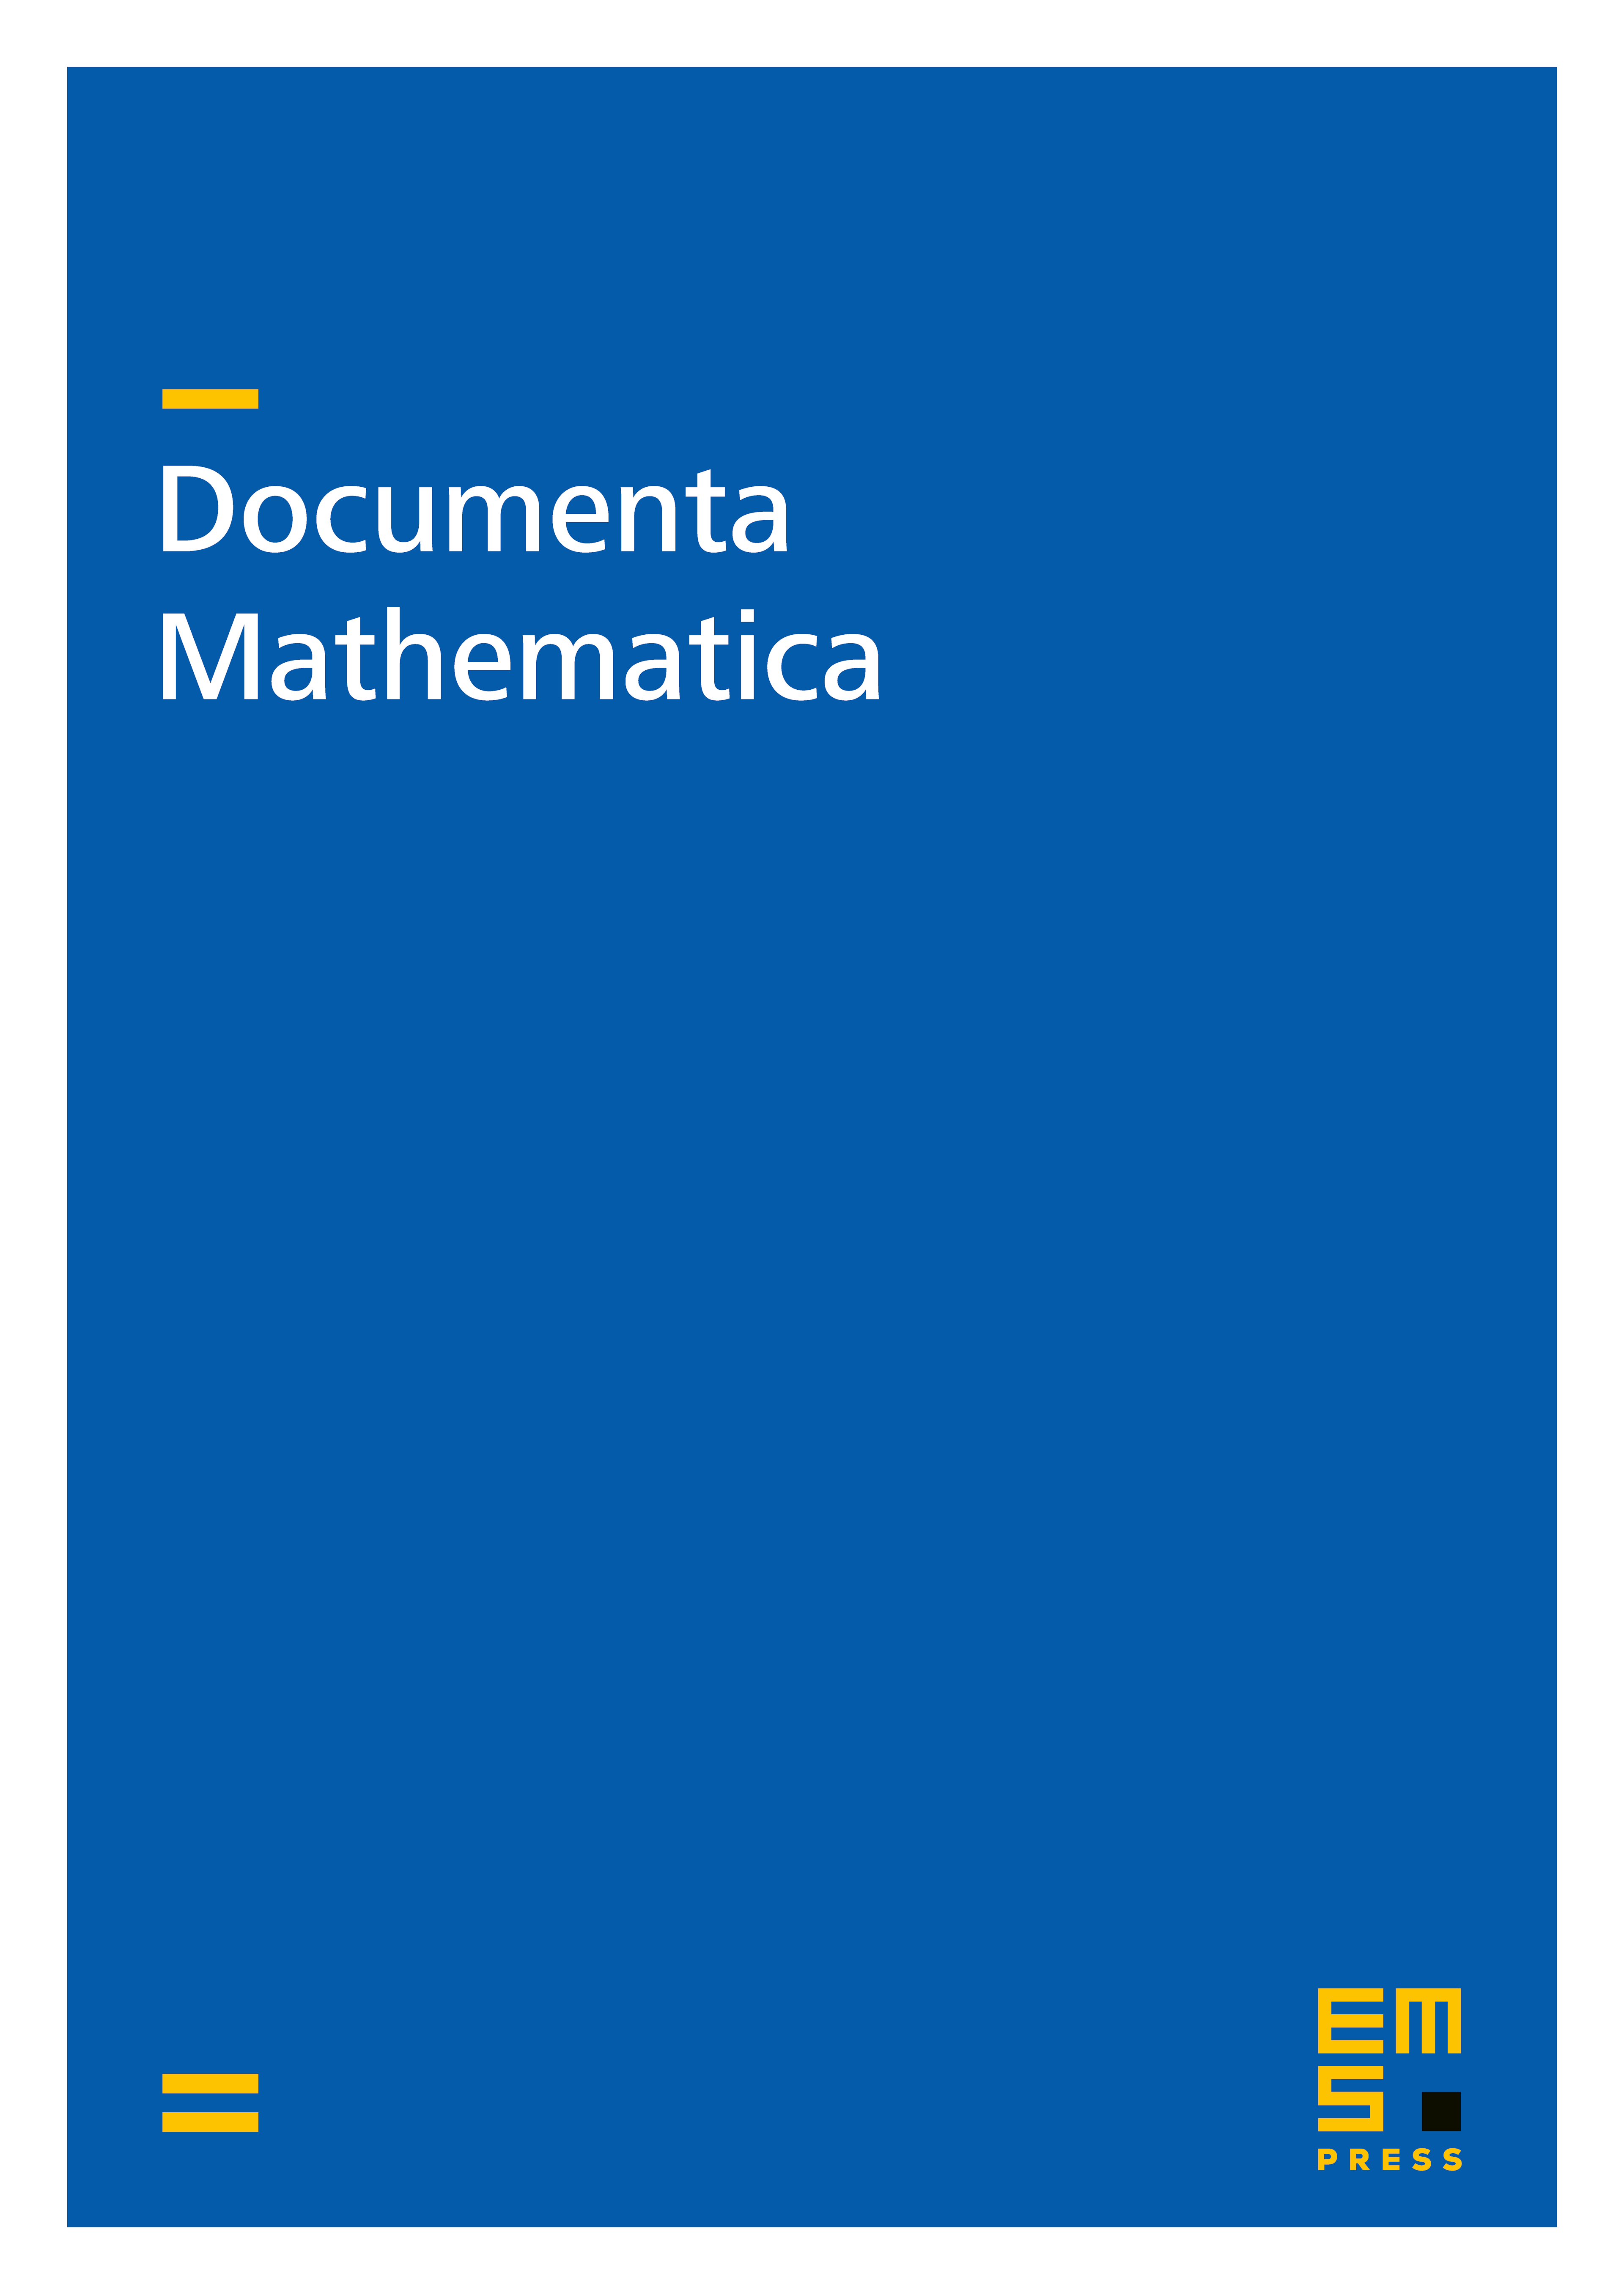 A new discriminant algebra construction cover